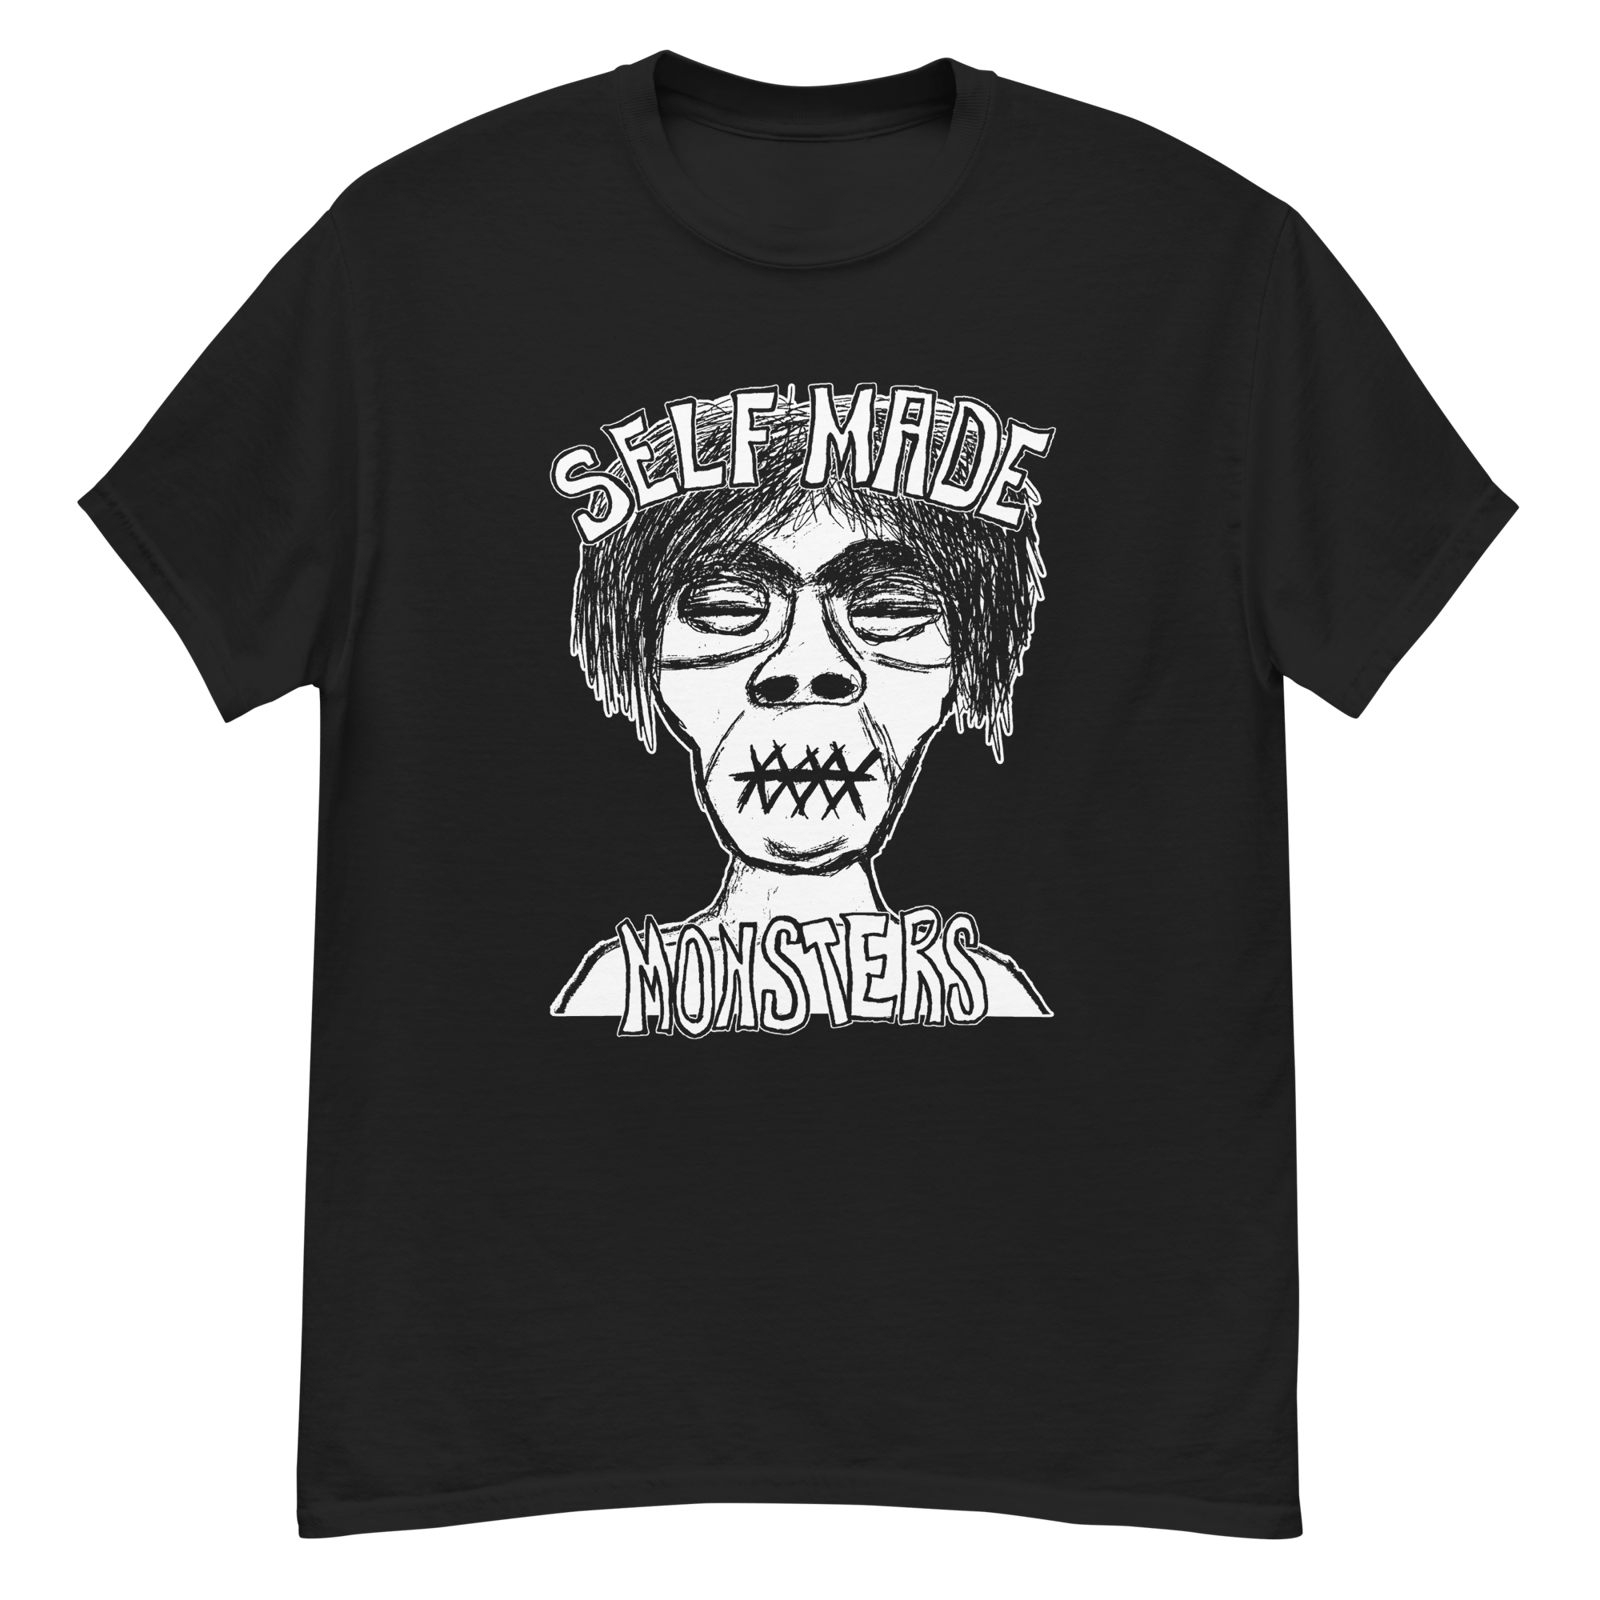 Shrunken Head Shirt - Black | Self Made Monsters